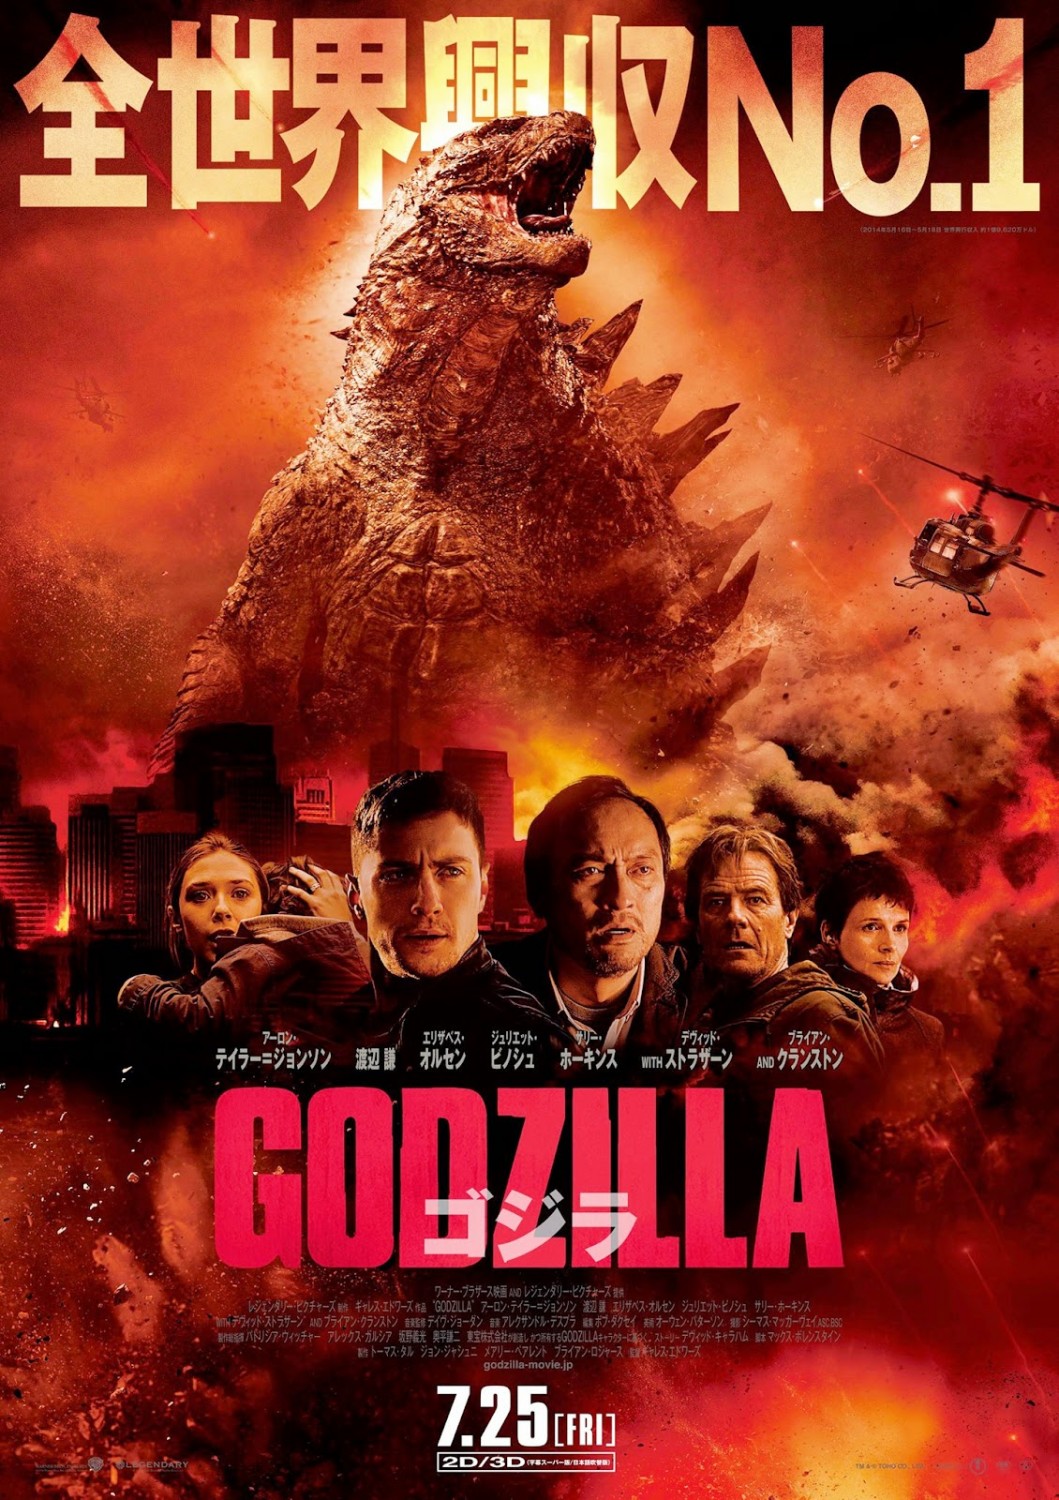 Extra Large Movie Poster Image for Godzilla (#22 of 22)